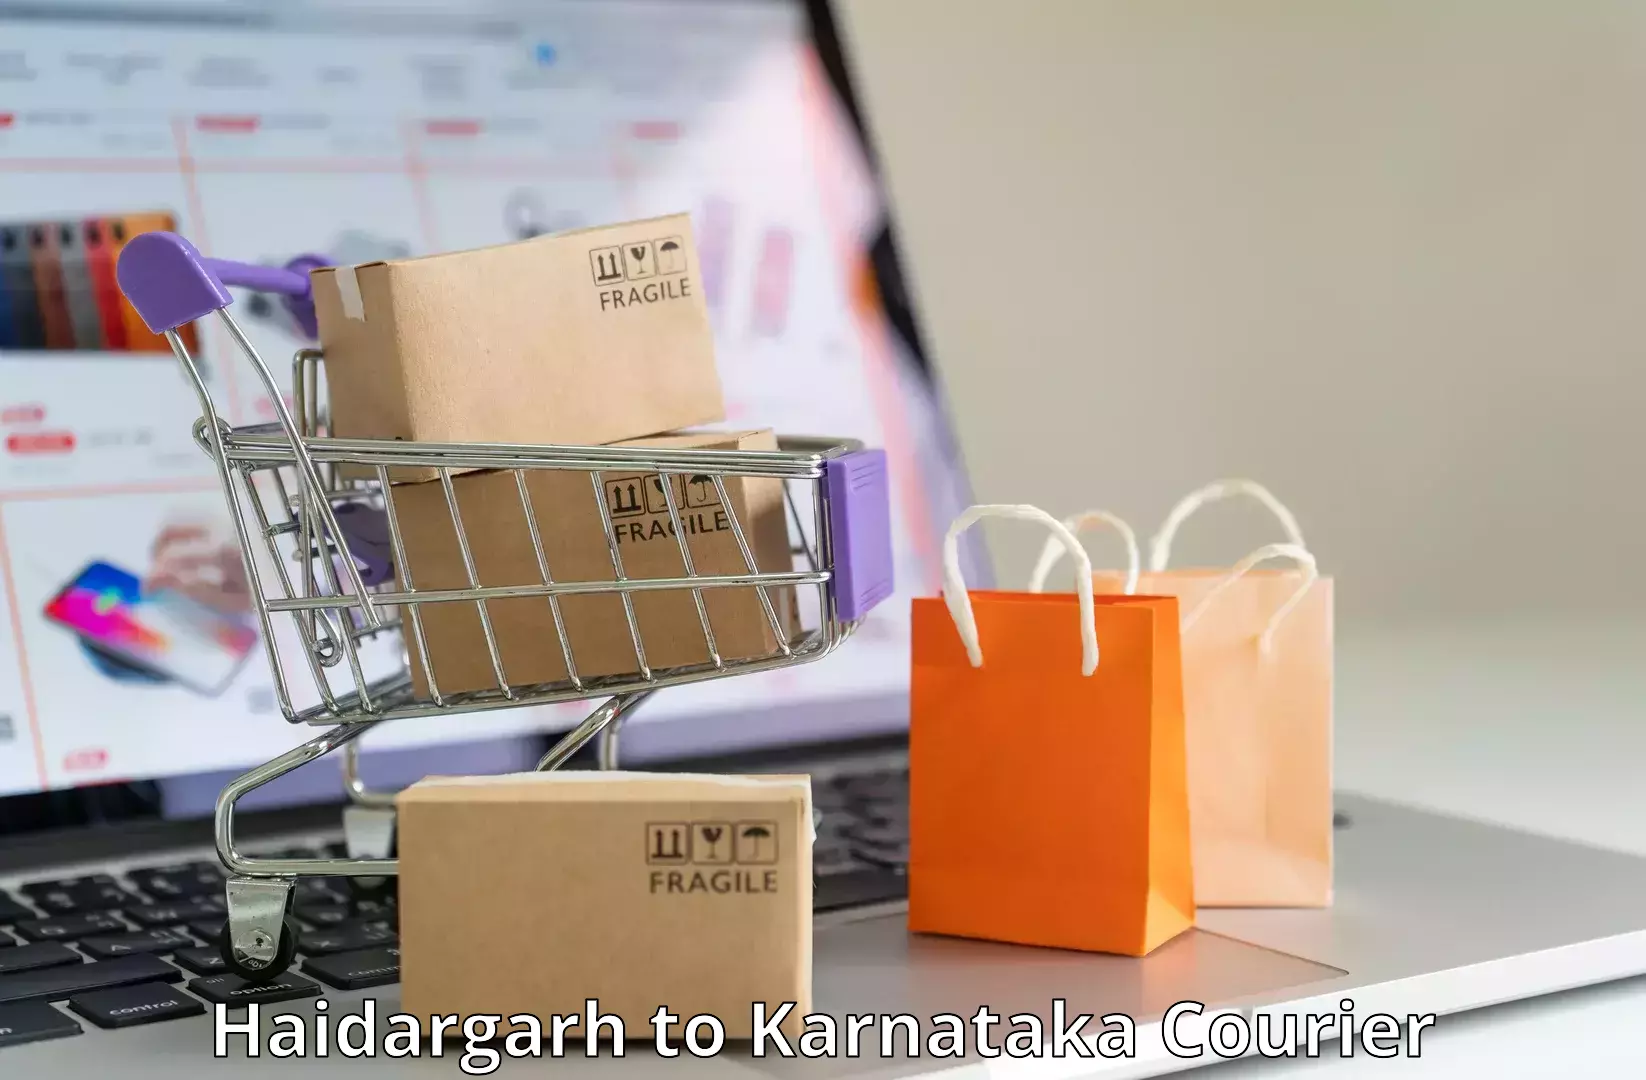 24-hour delivery options Haidargarh to Karnataka